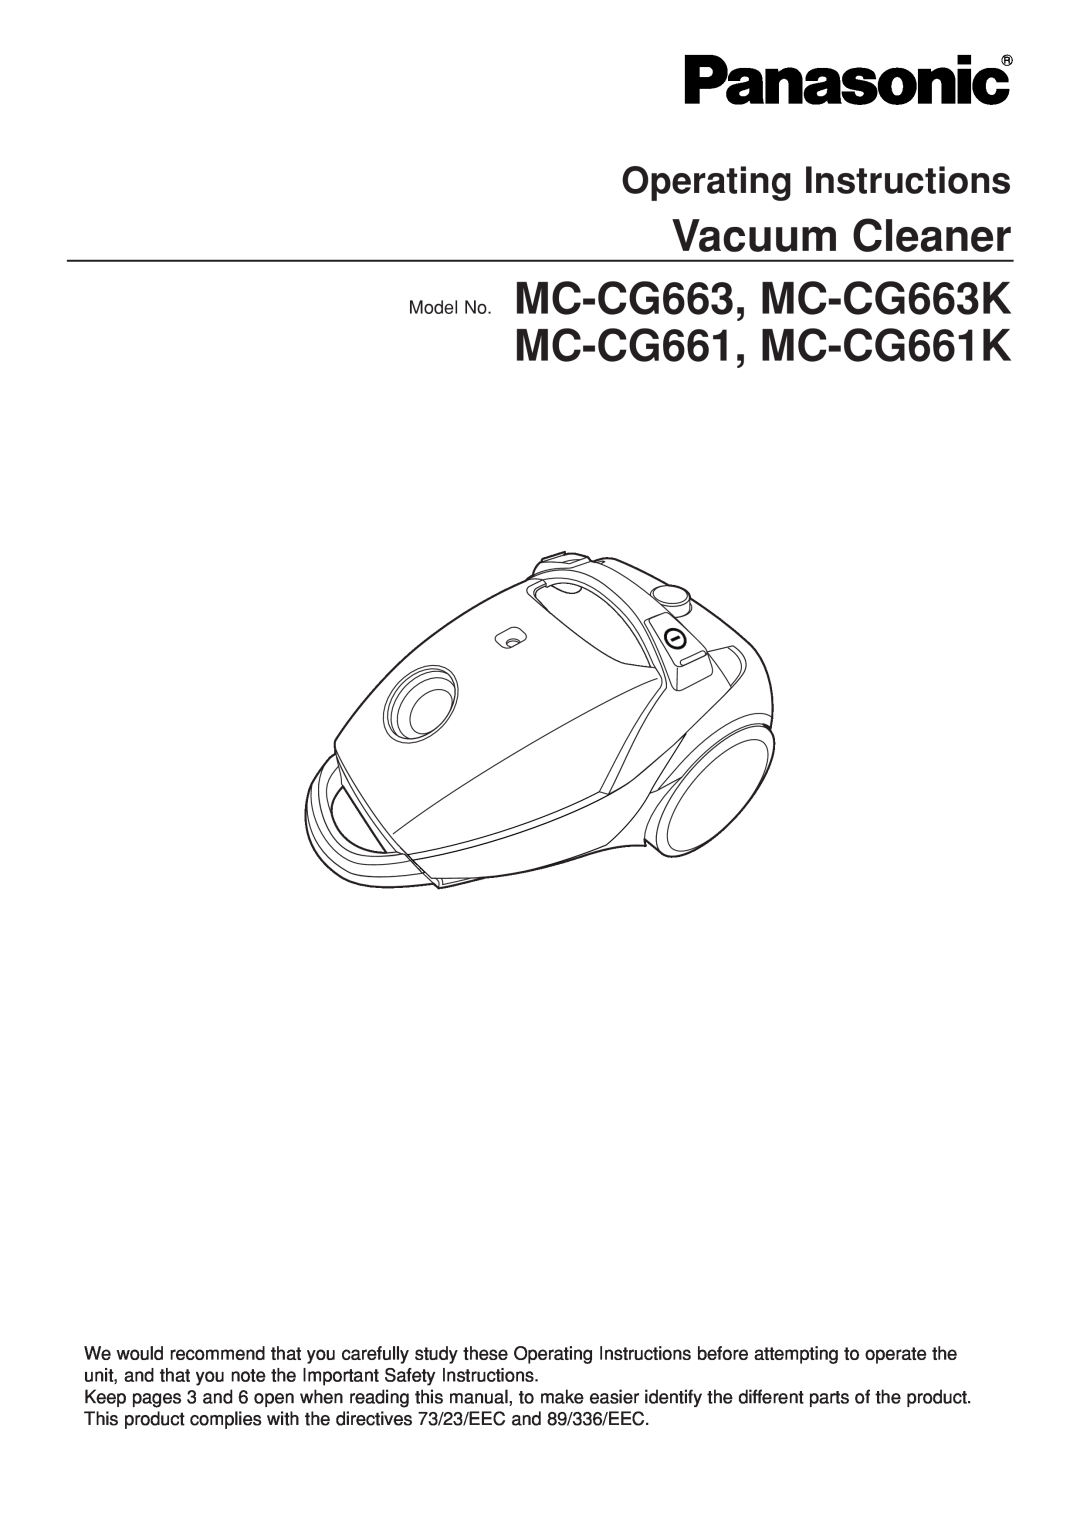 Panasonic specifications Vacuum Cleaner Model No. MC-CG663, MC-CG663K, MC-CG661, MC-CG661K, Operating Instructions 